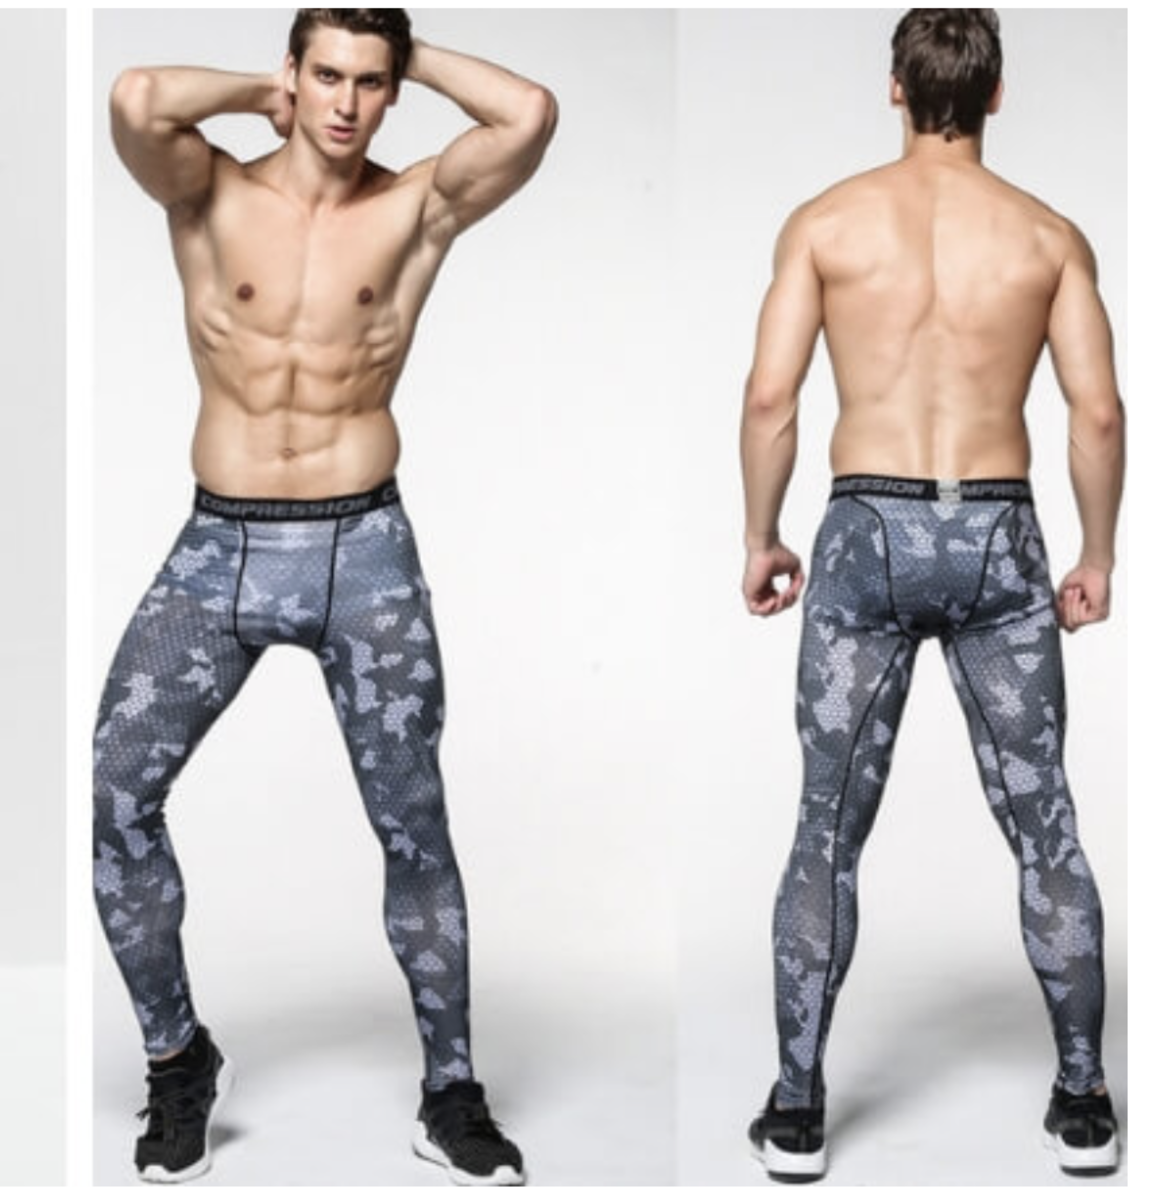 Meggings: men can wear leggings too